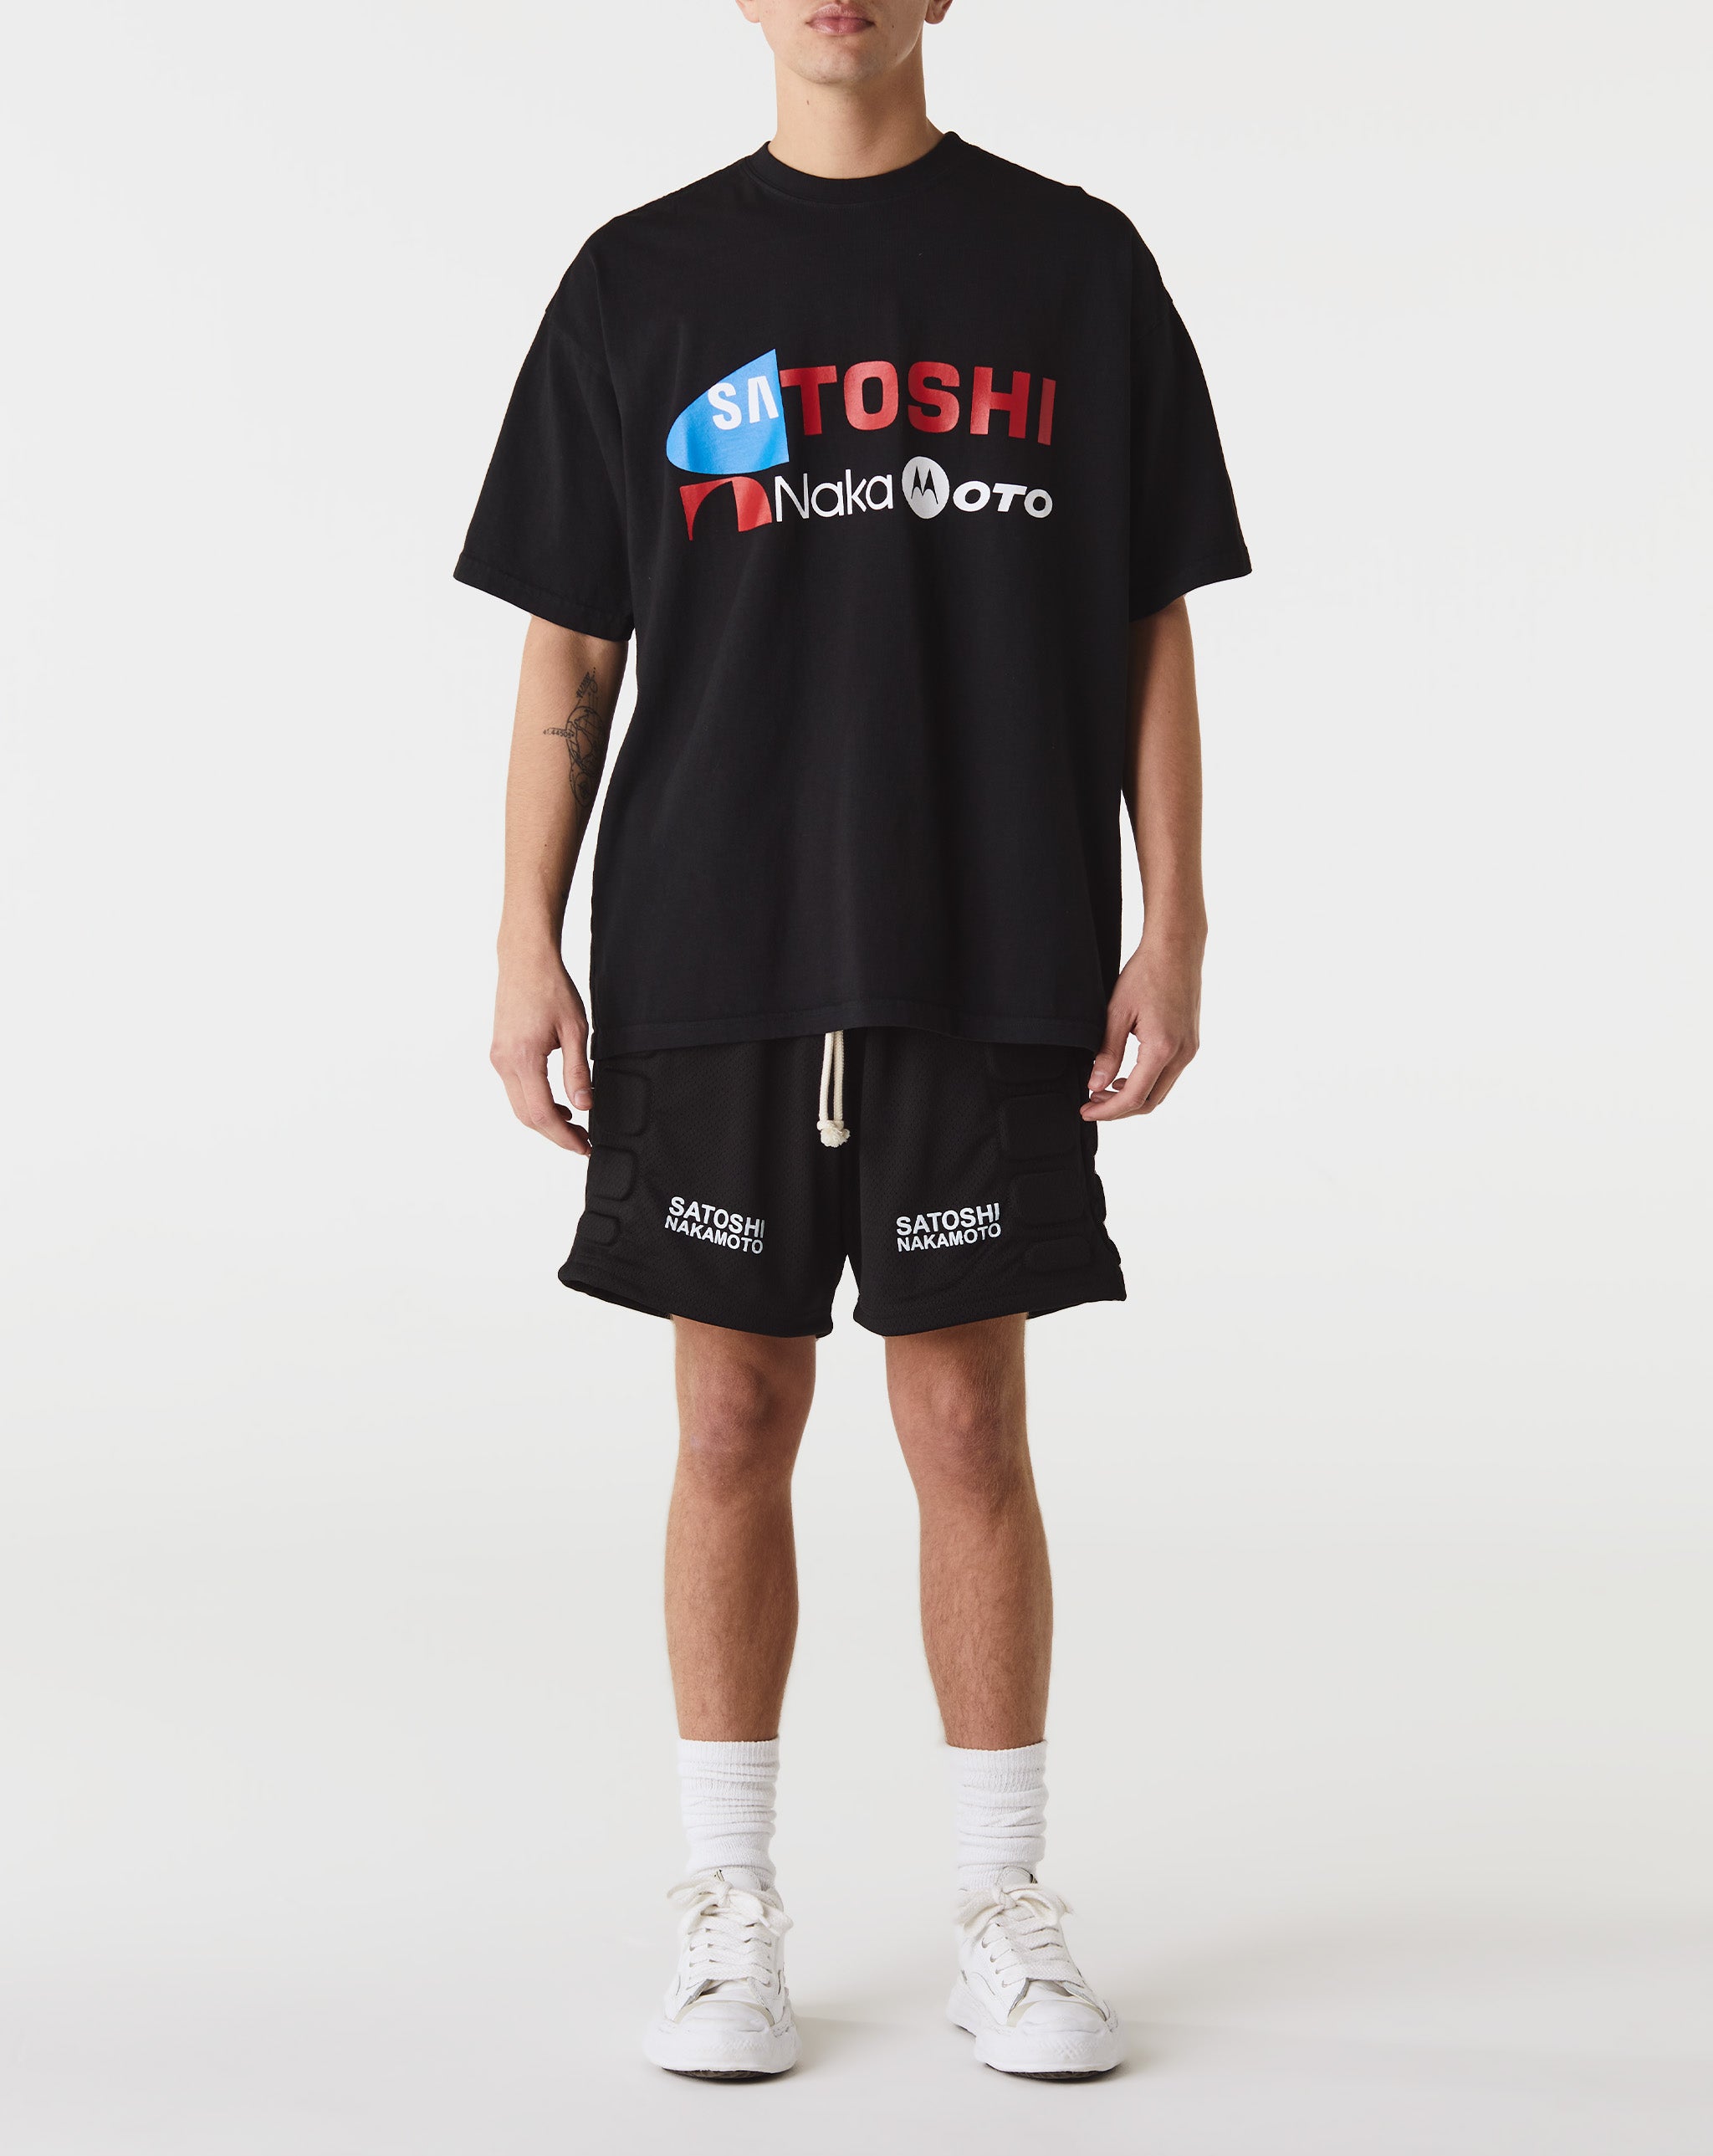 Satoshi Nakamoto Tech Giants T-Shirt  - Cheap 127-0 Jordan outlet